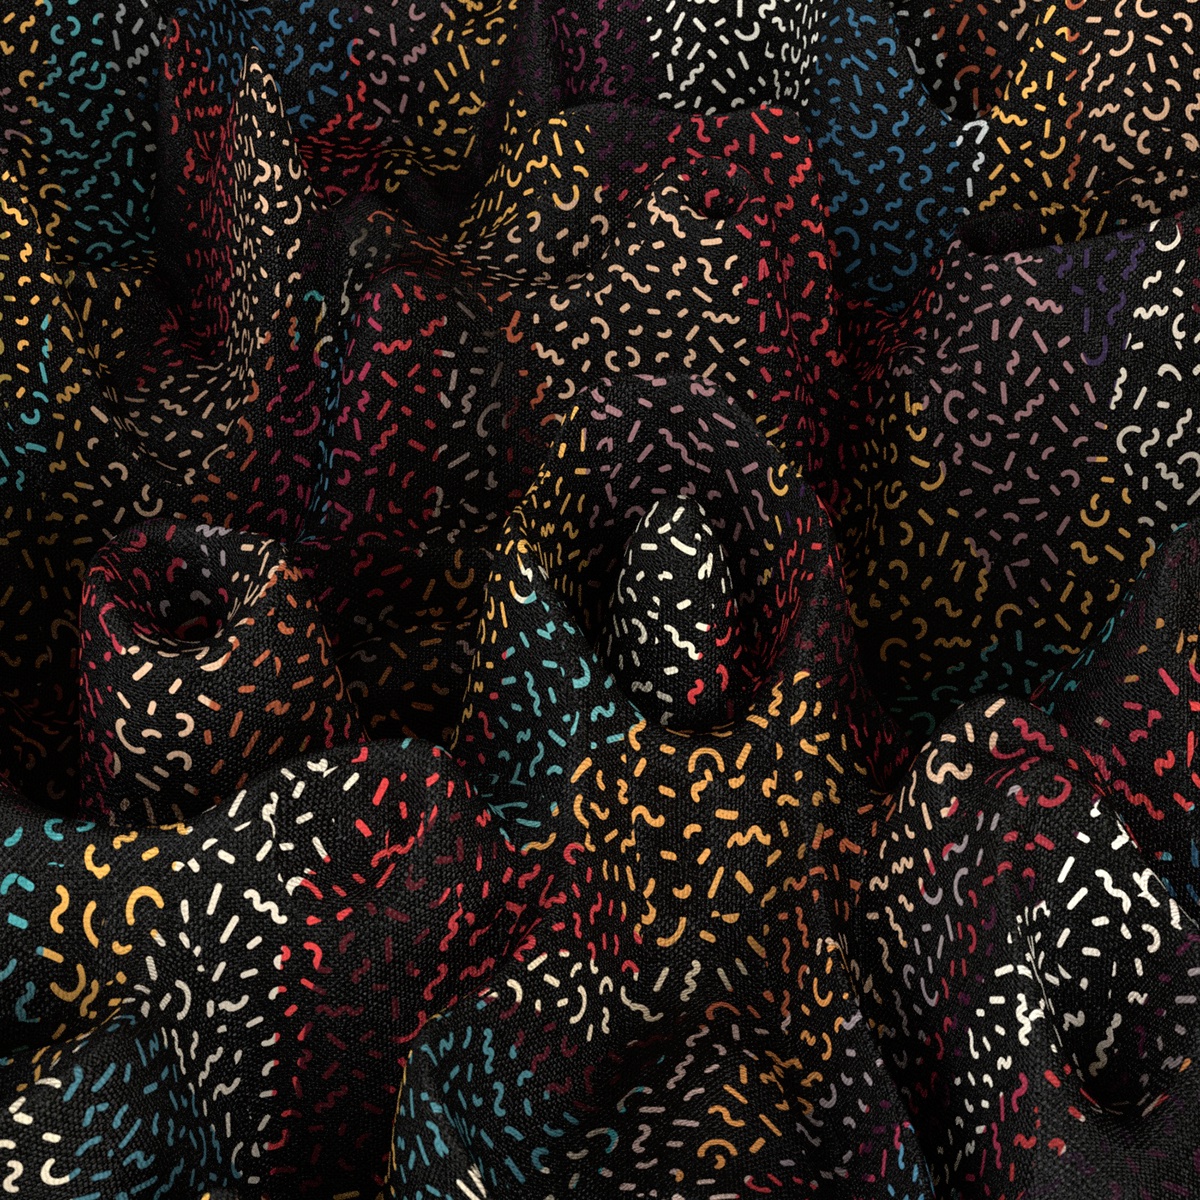 textile background voronoid surface iridescent Fashion  rubber